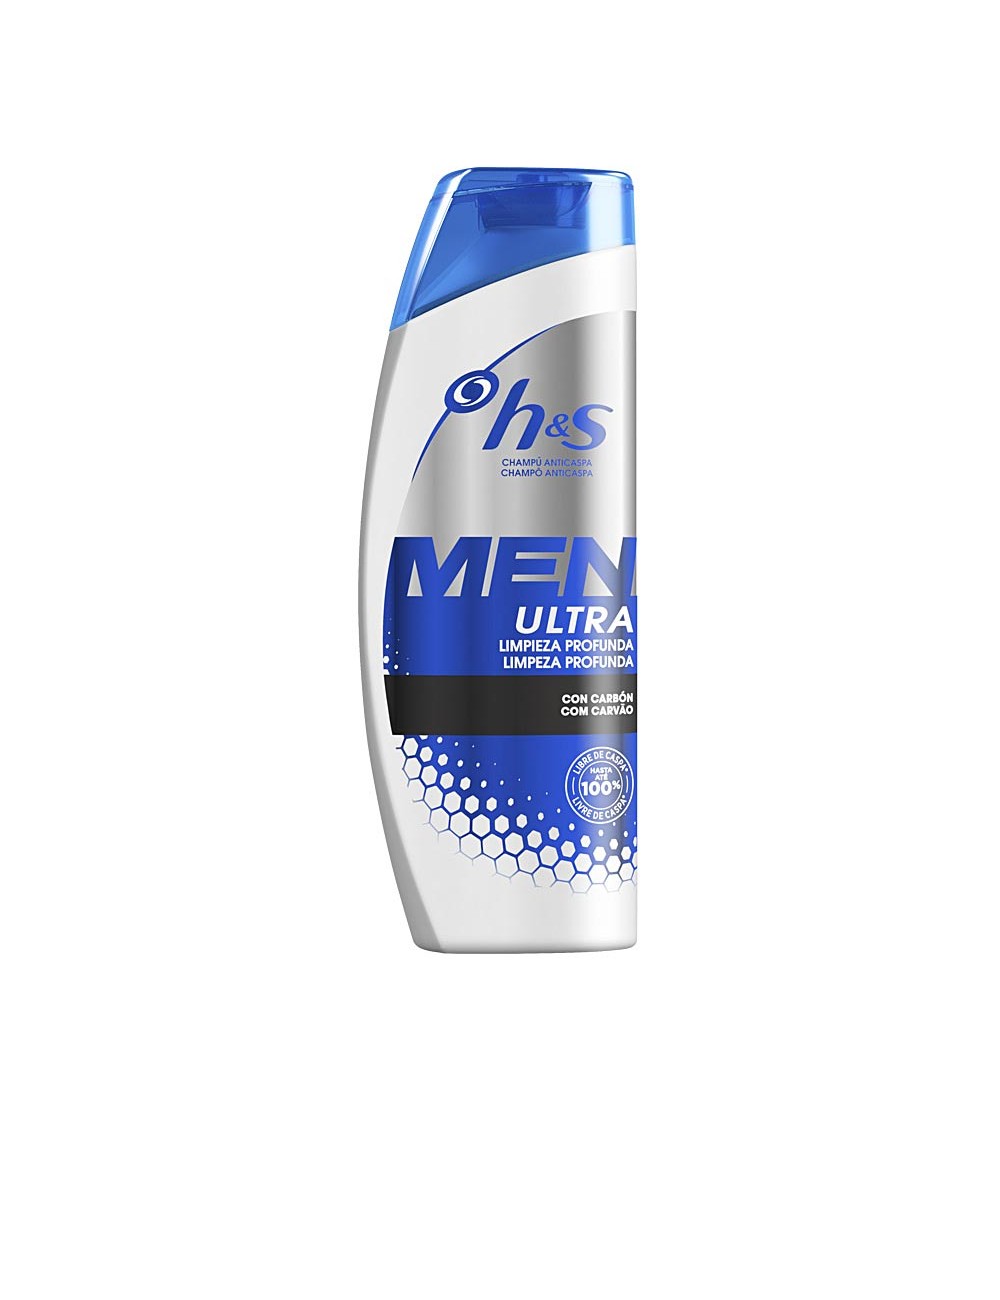 H&S MEN ULTRA shampooing nettoyant en profondeur 600 ml